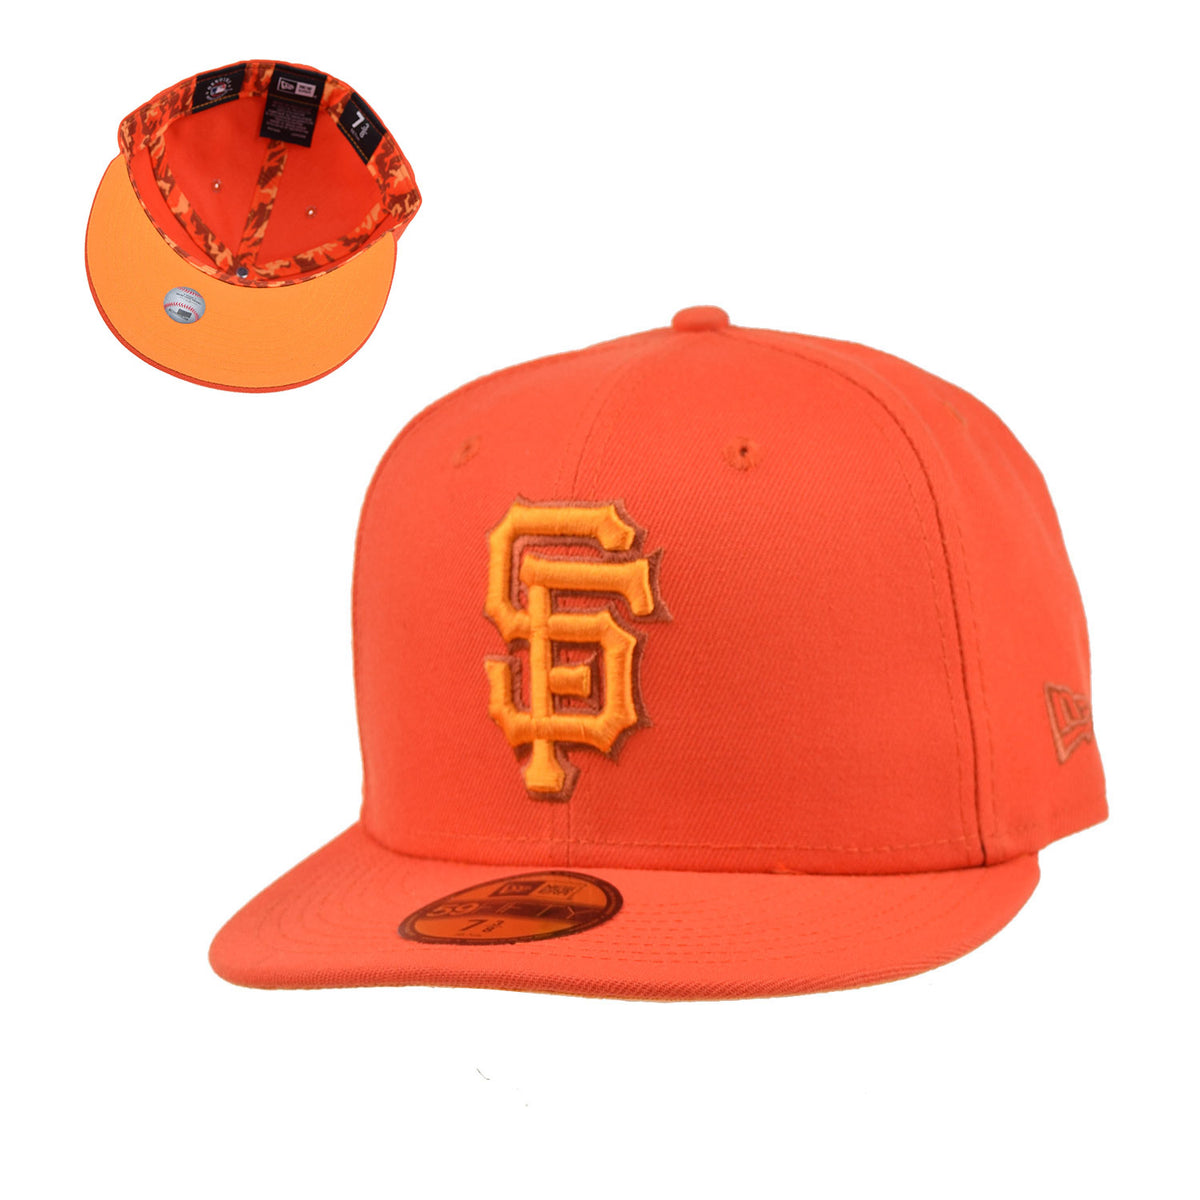 San Francisco Giants Baseball Jersey Onesie - Free Shipping - Shop Now